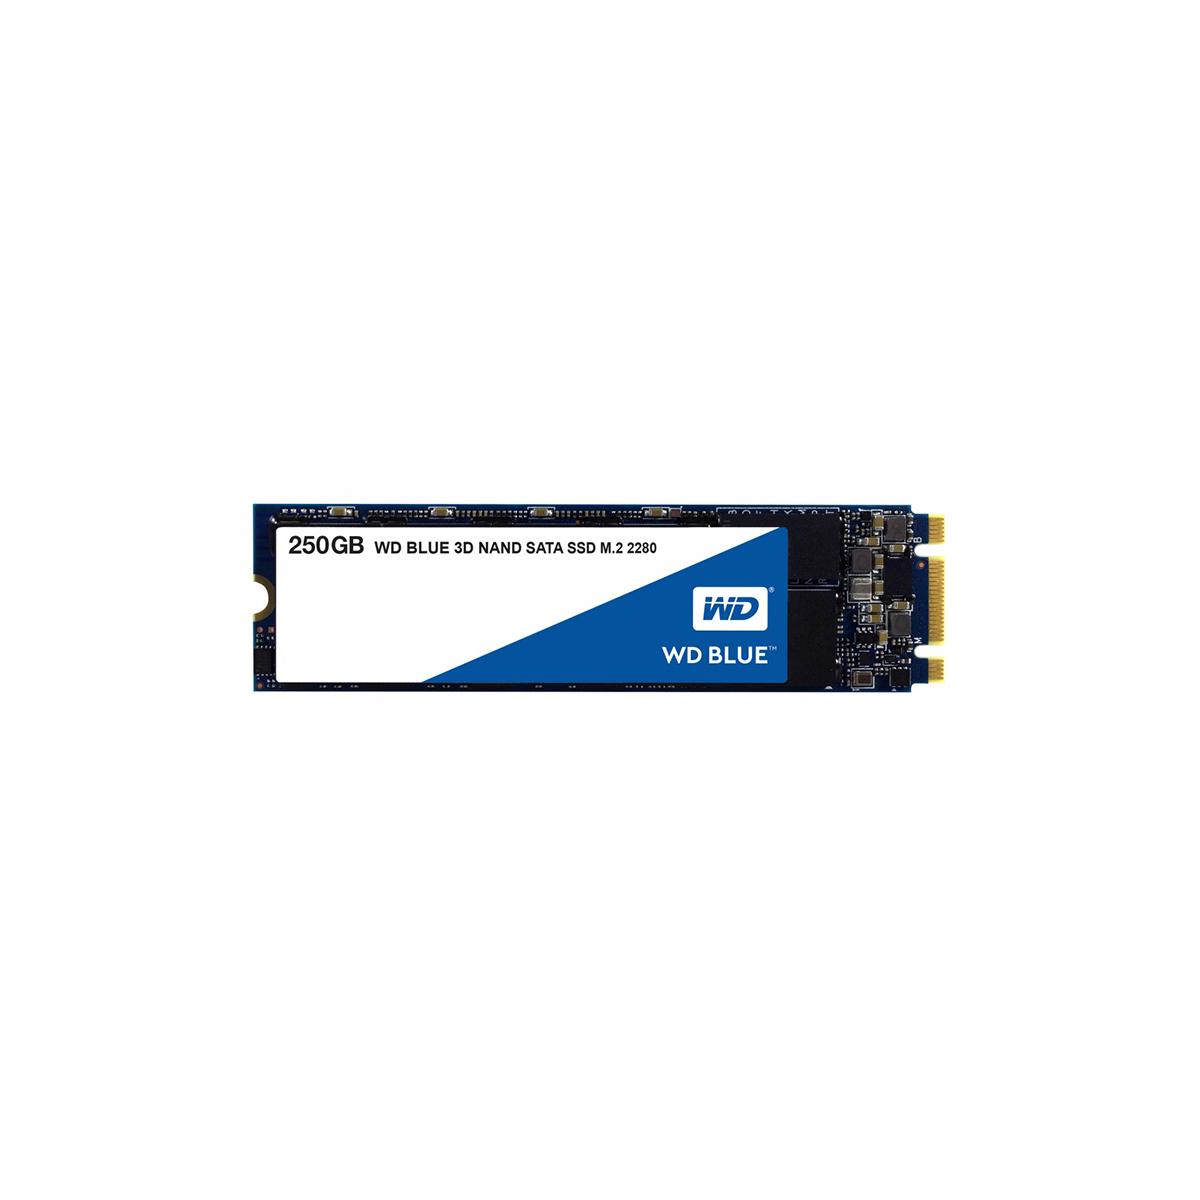 UNIDAD SSD M.2 WD 250GB (WDS250G2B0B) BLUE, SATA,2280 - WD